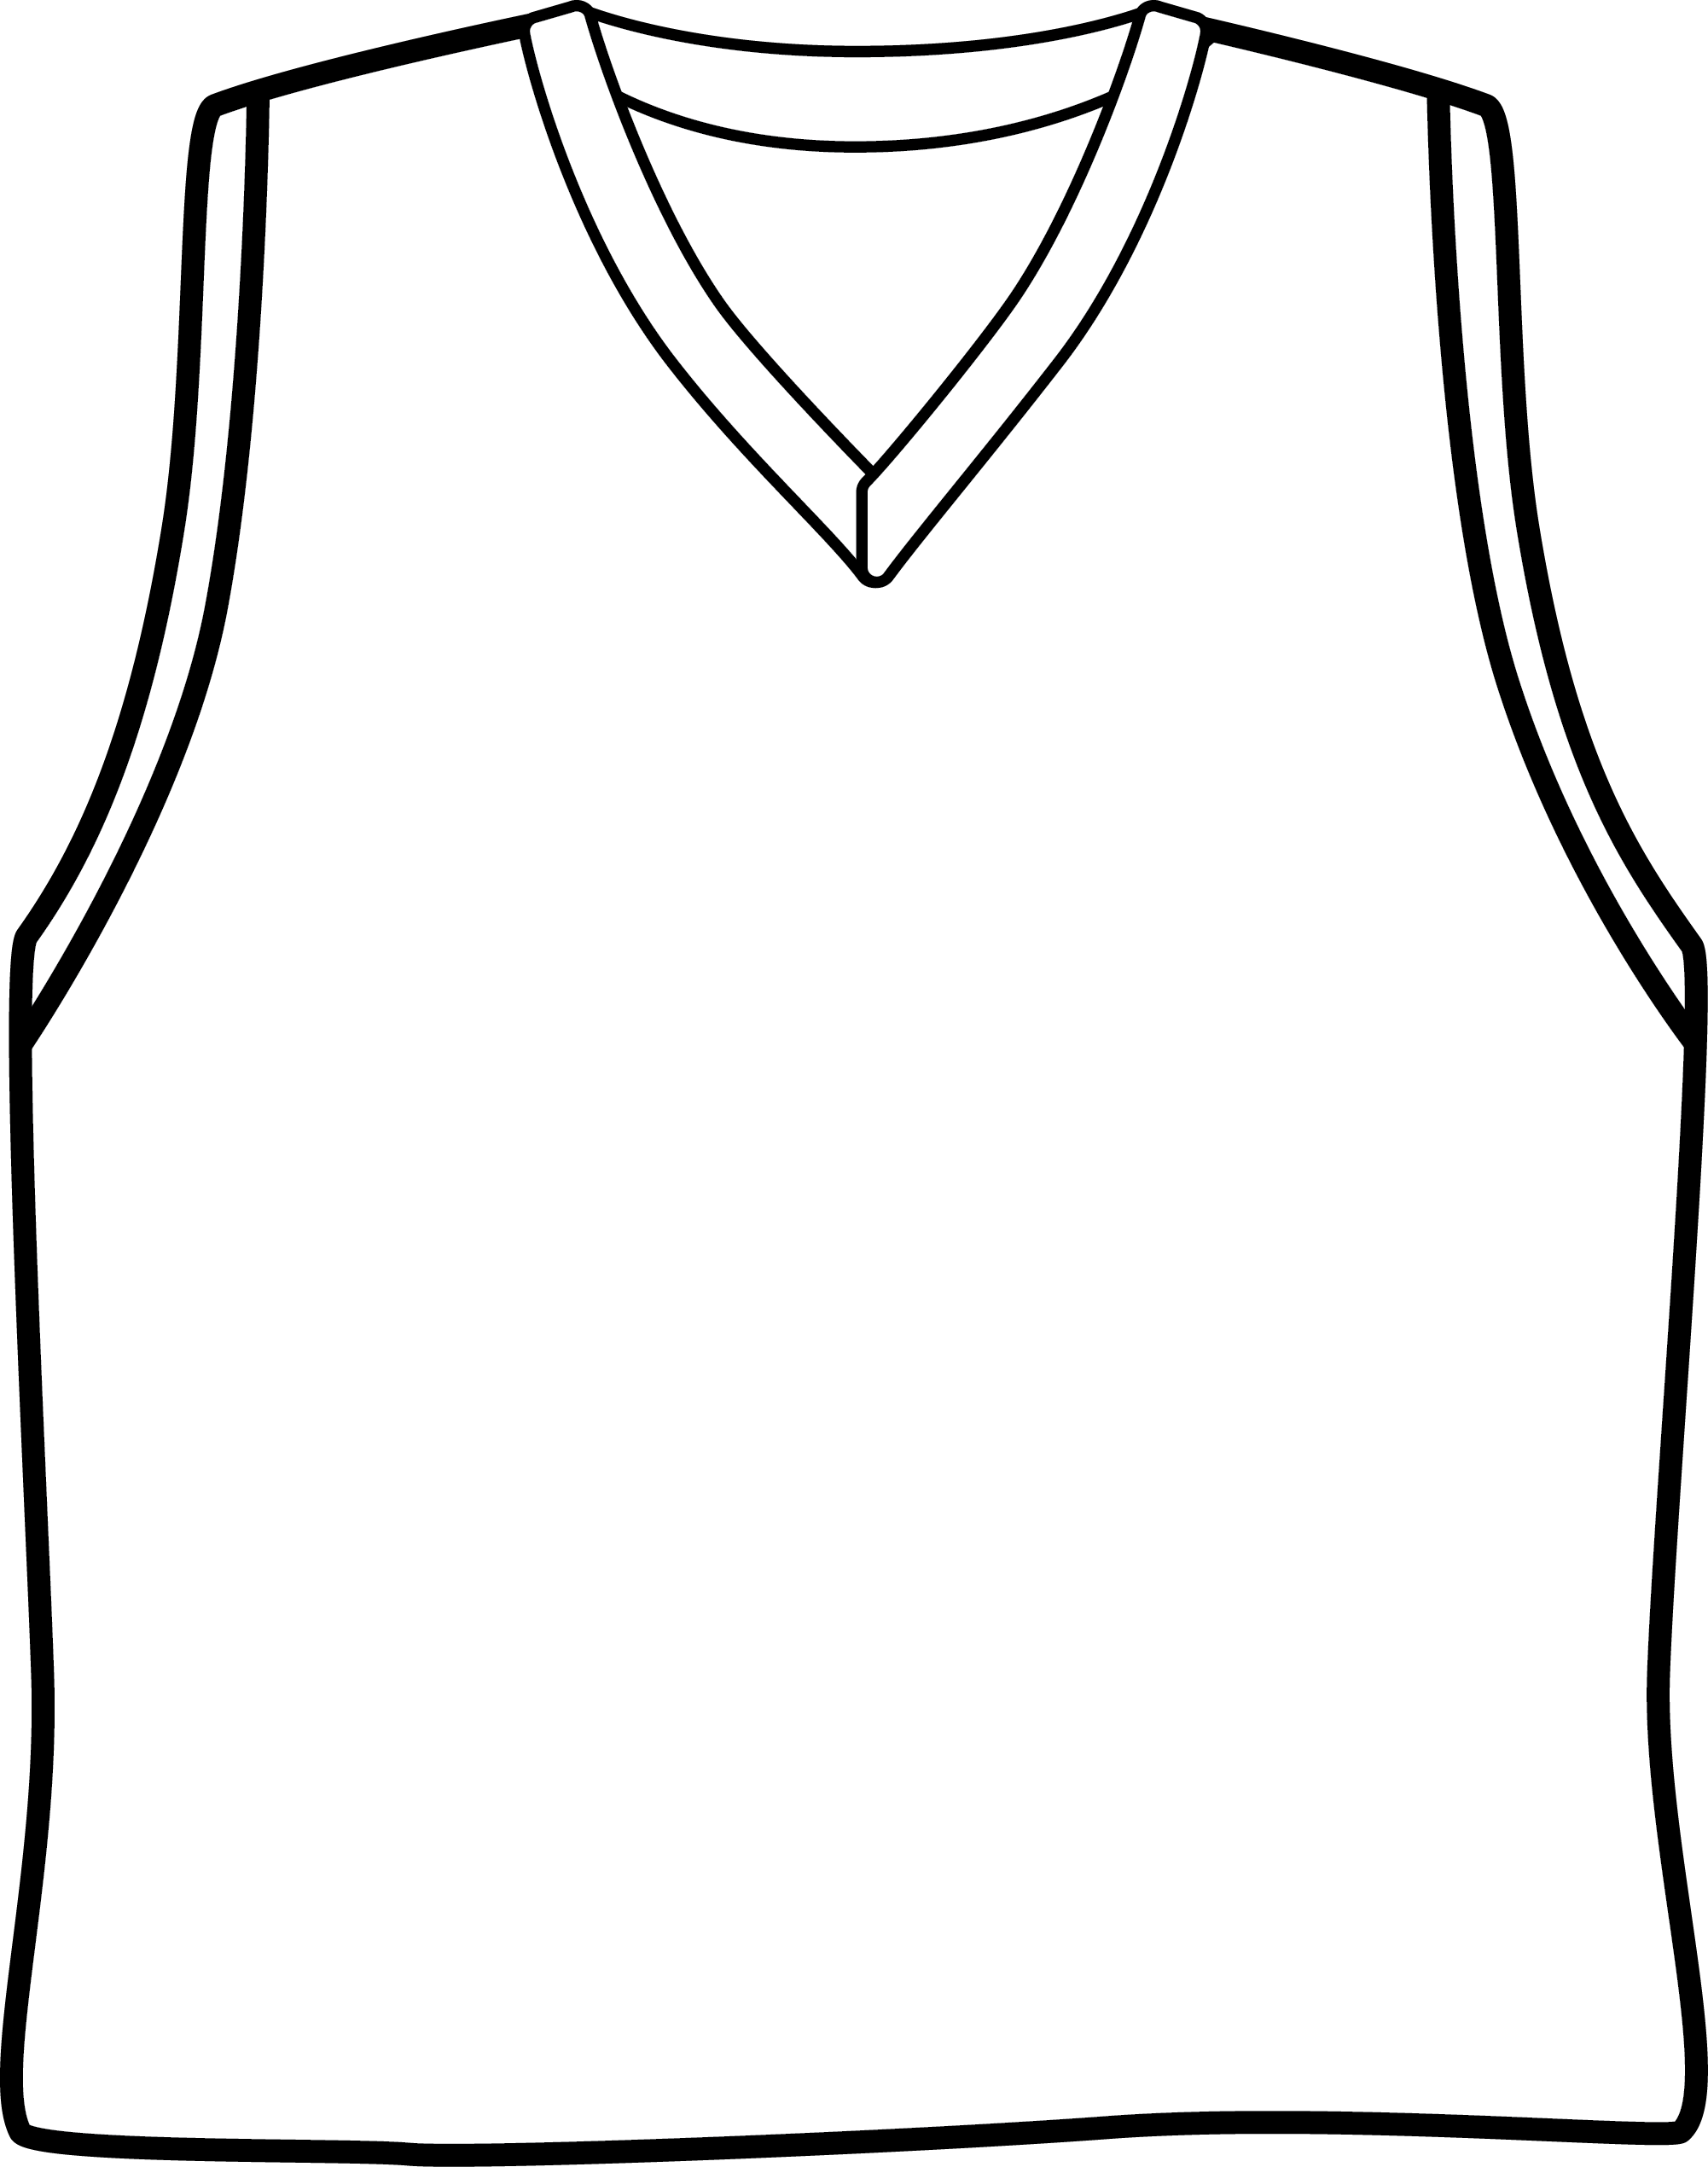 jersey clipart drawn basketball